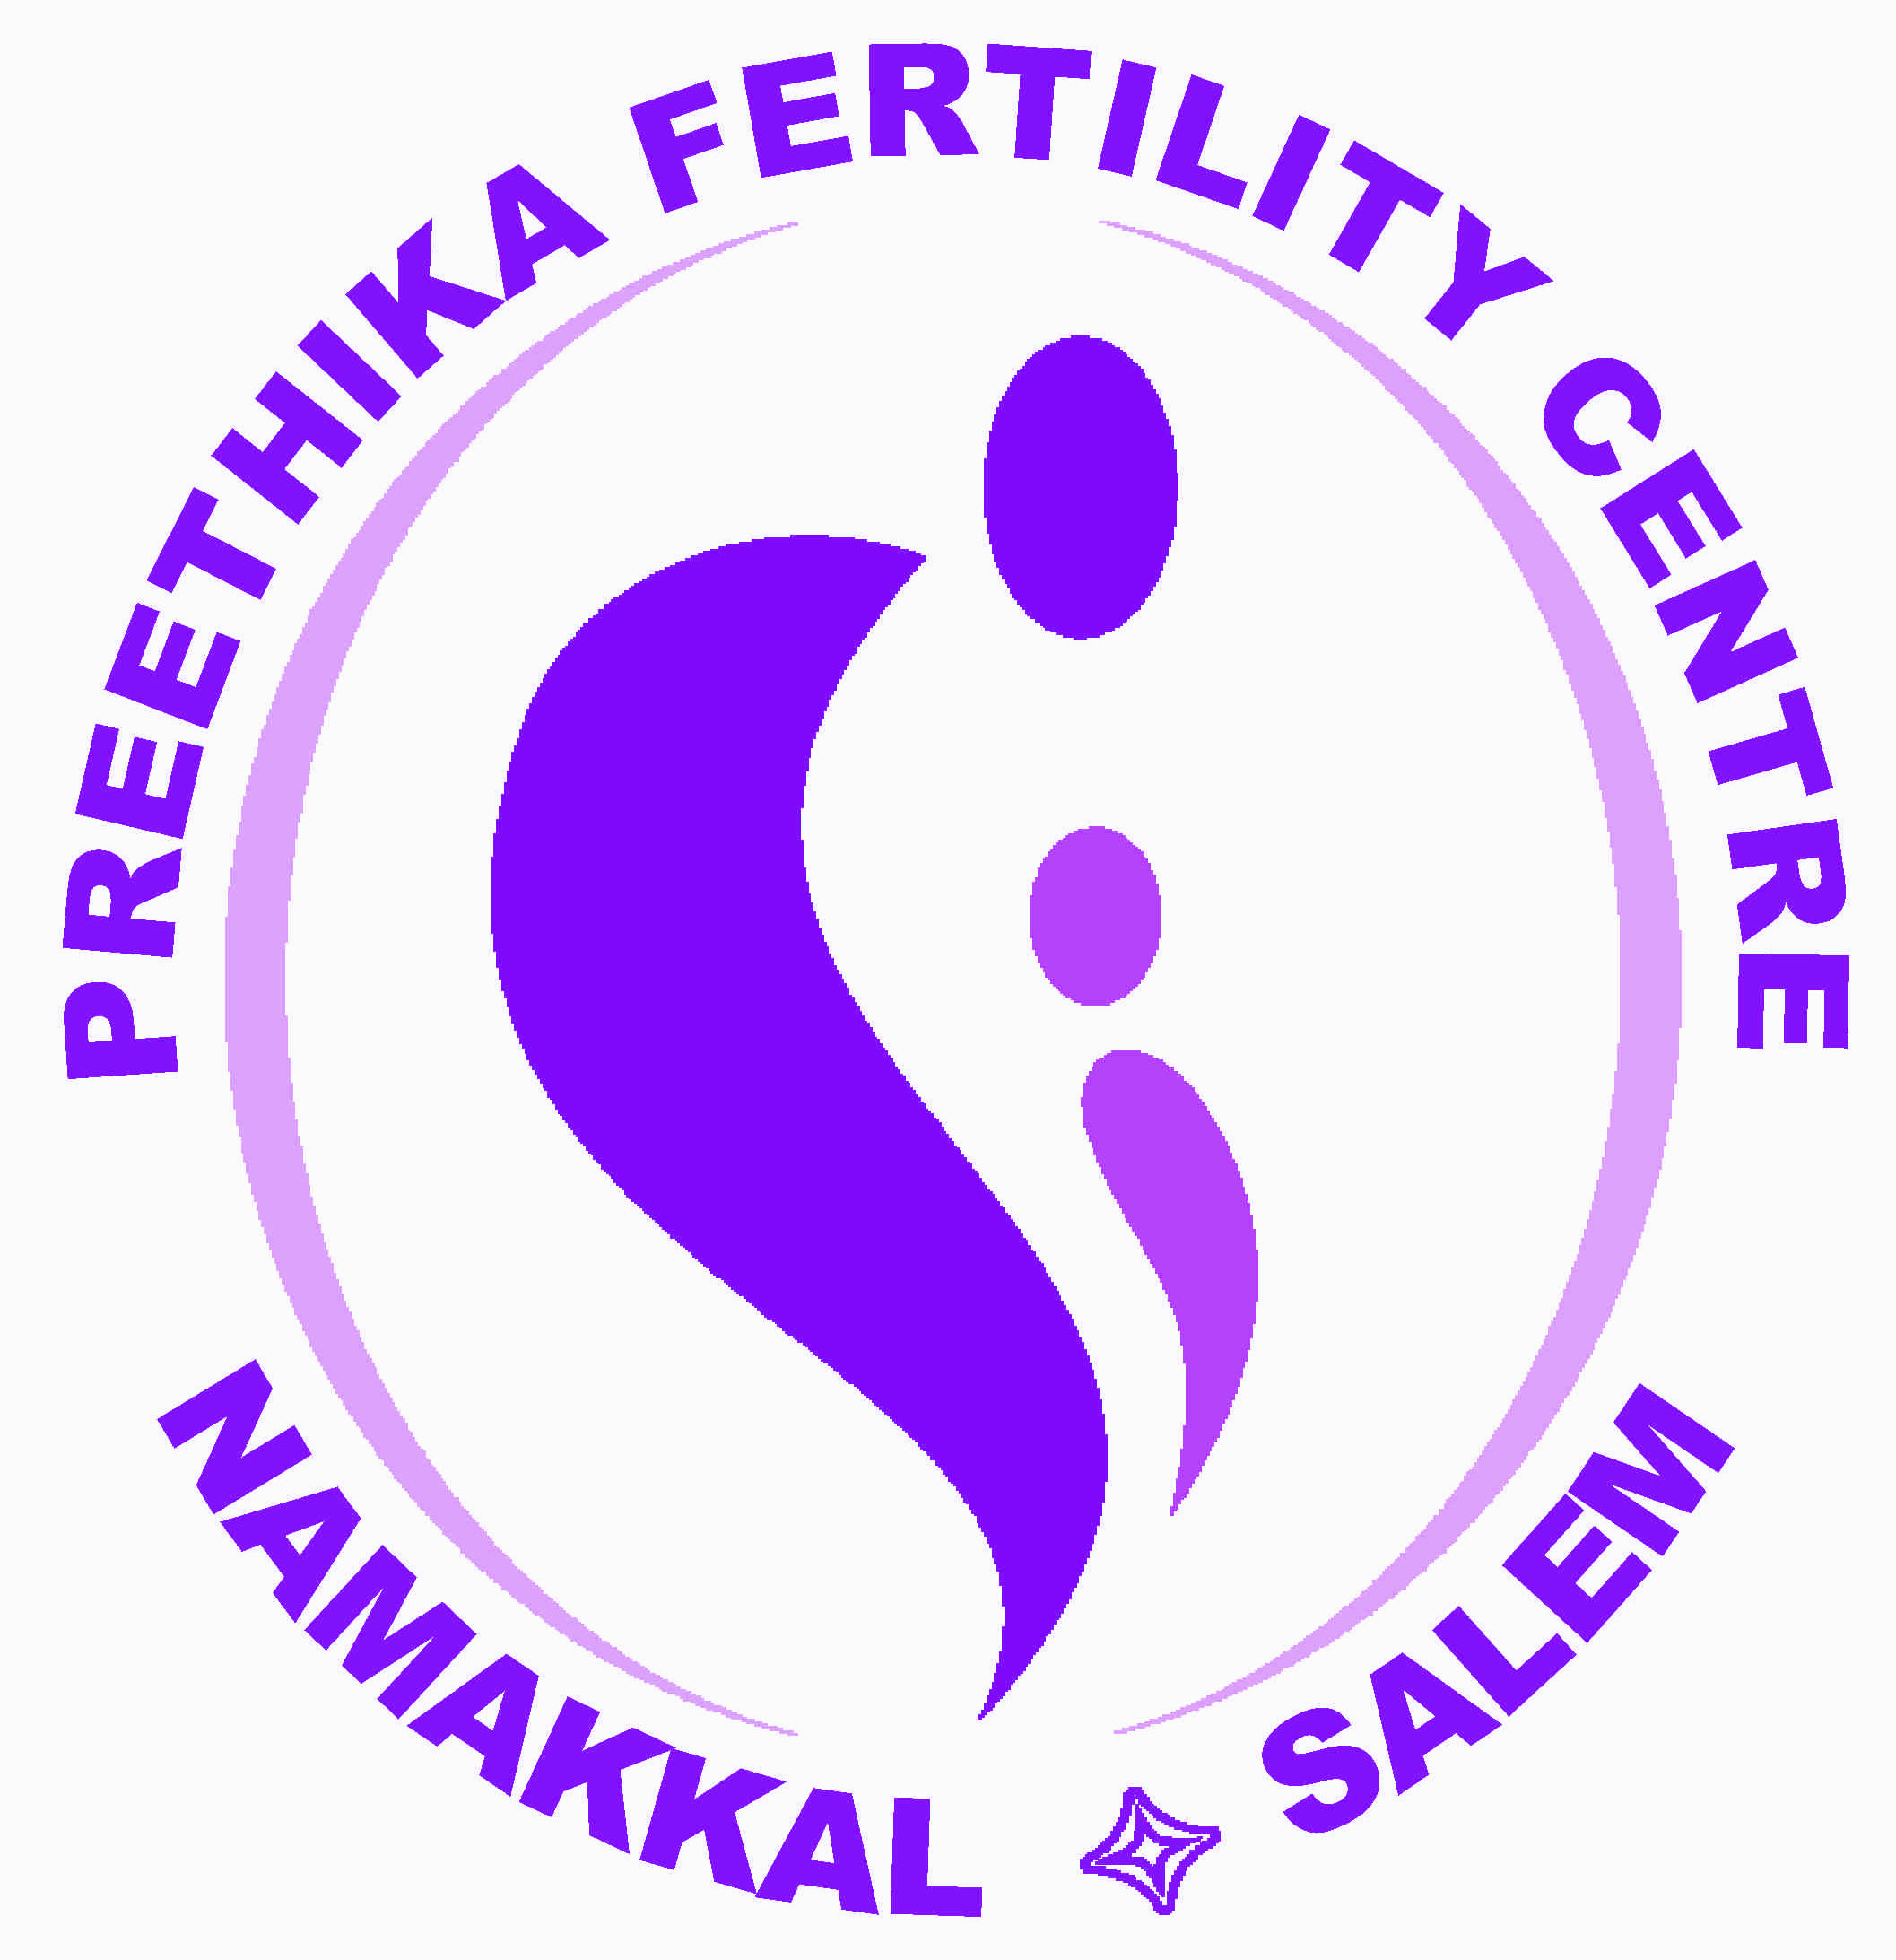 Preethika Fertility Center|Veterinary|Medical Services